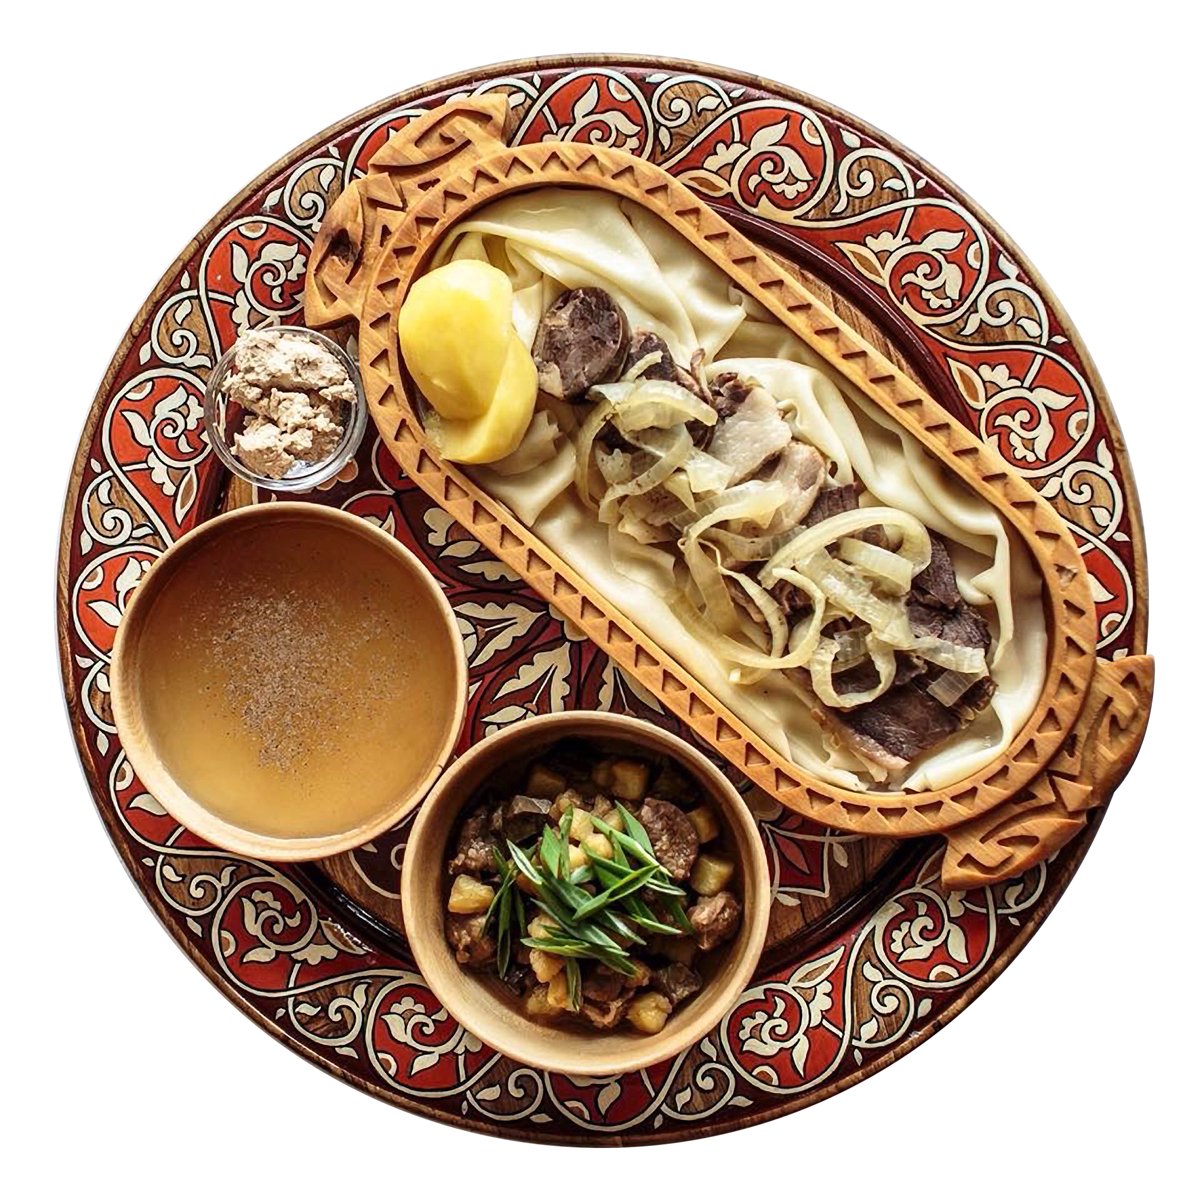 Блюда казахского народа. Бешбармак. Астау для бешбармака. Казахская кухня бешбармак. Вилкин бешбармак.